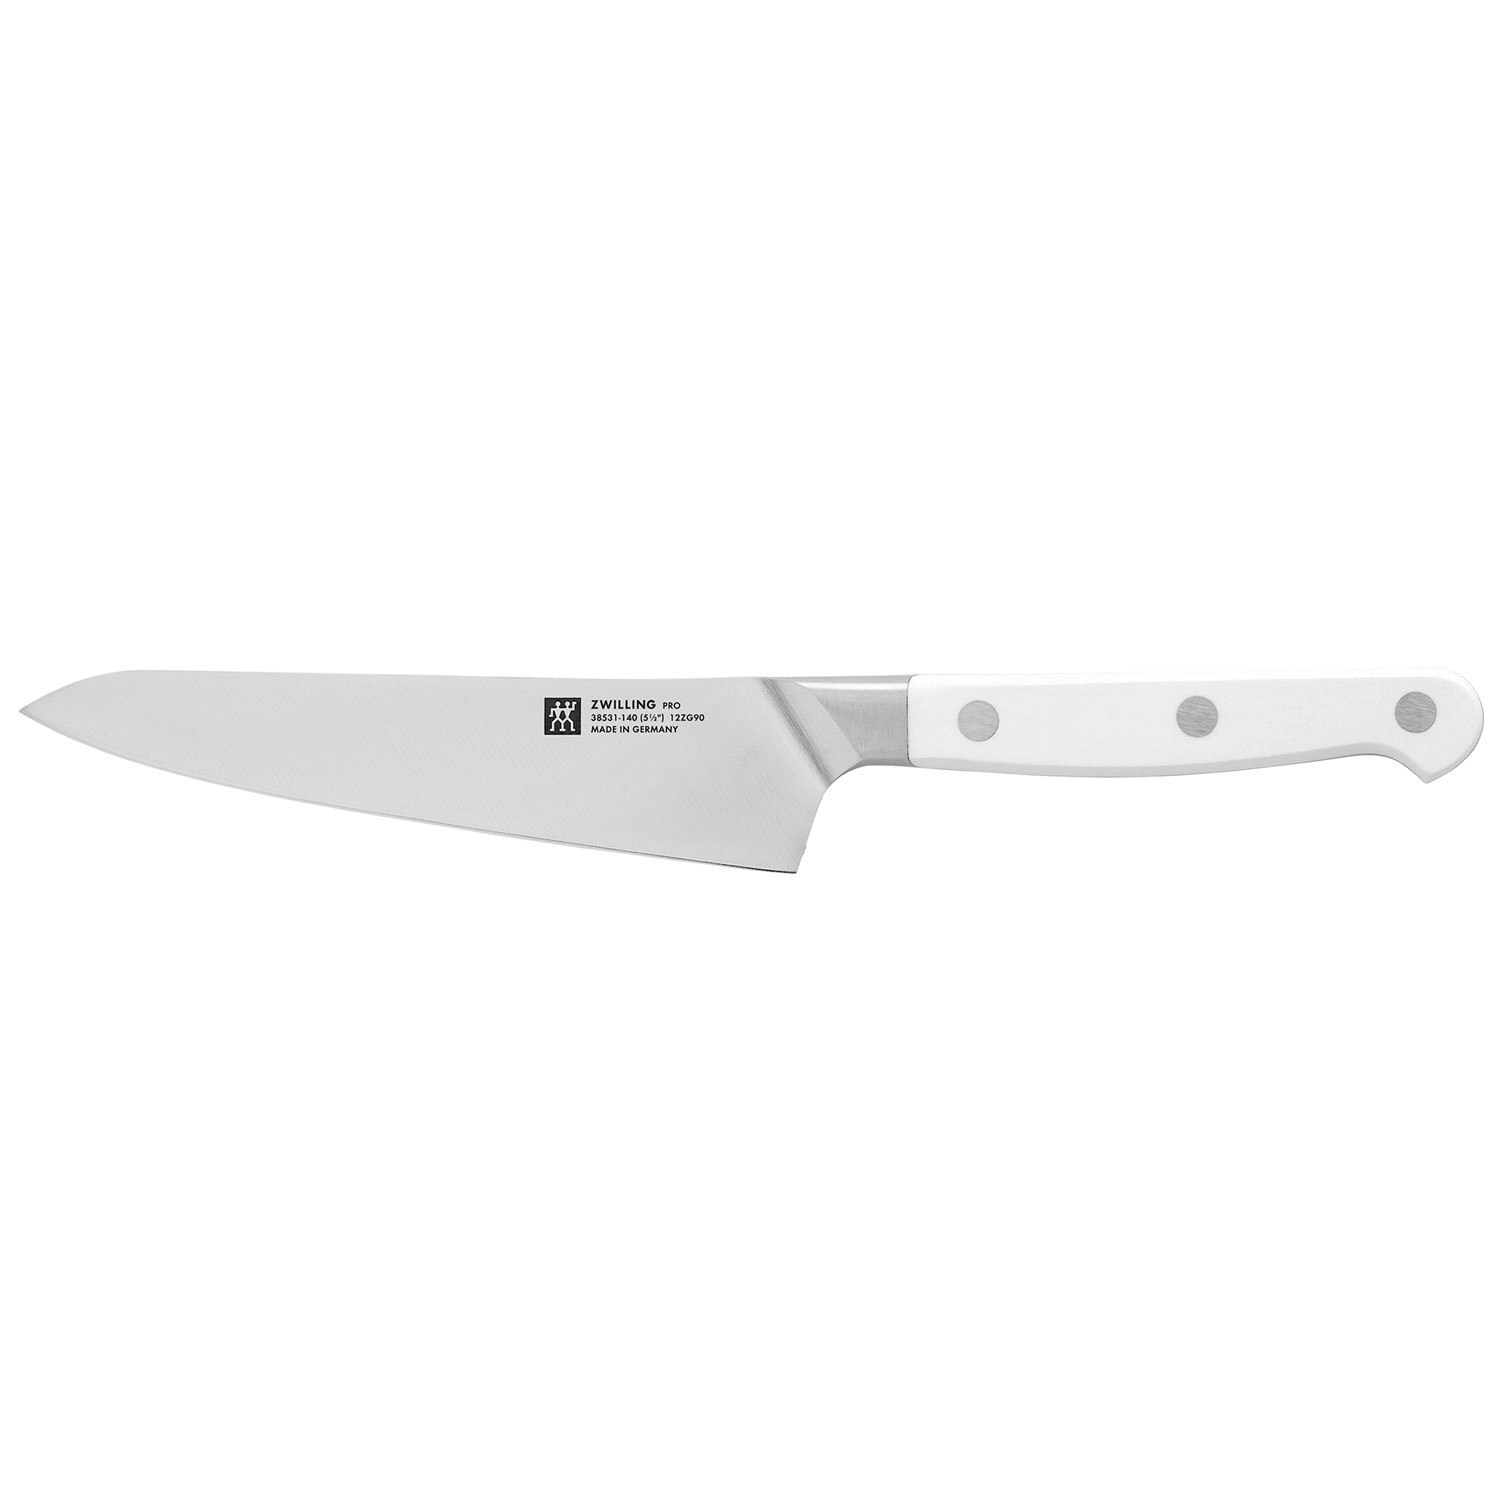 https://royaldesign.com/image/2/zwilling-pro-le-blanc-compact-chef-knife-14-cm-0